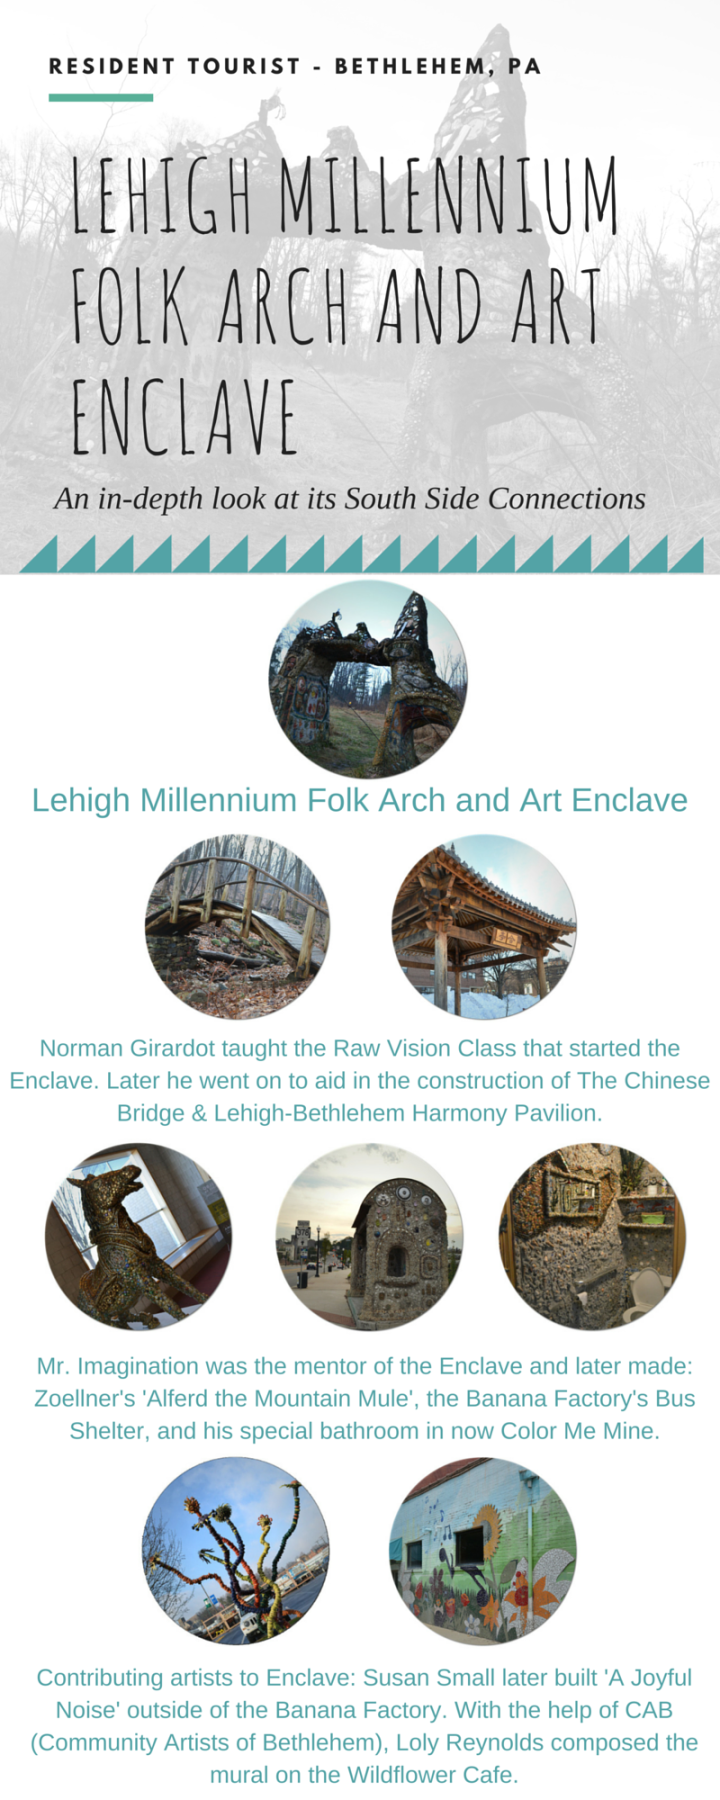 Lehigh Millennium Folk Arch and Art Enclave